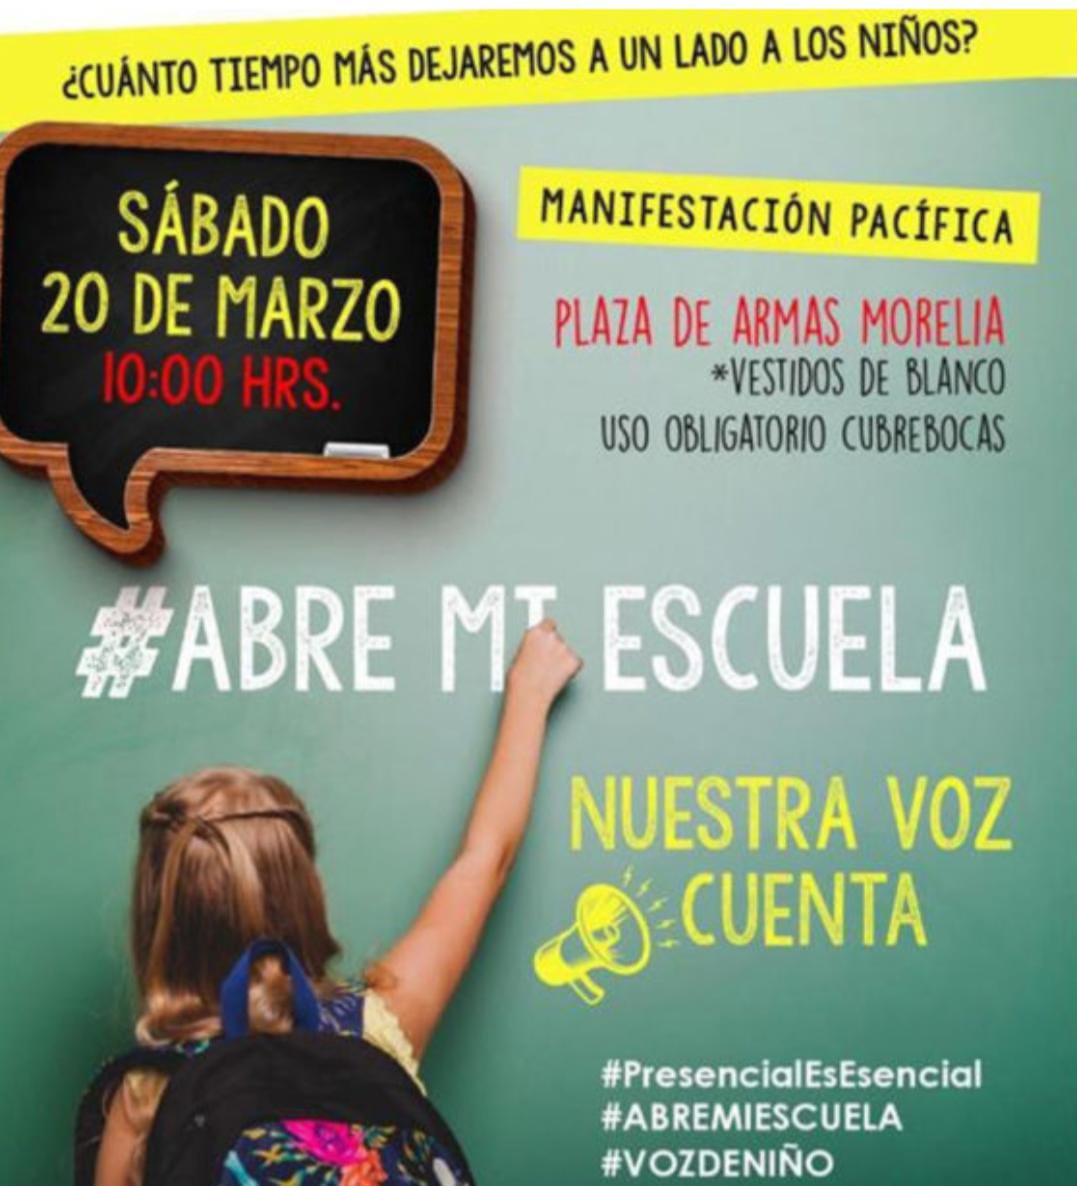 Asociación #AbremiEscuela realizará manifestación pacífica en Plaza de Armas